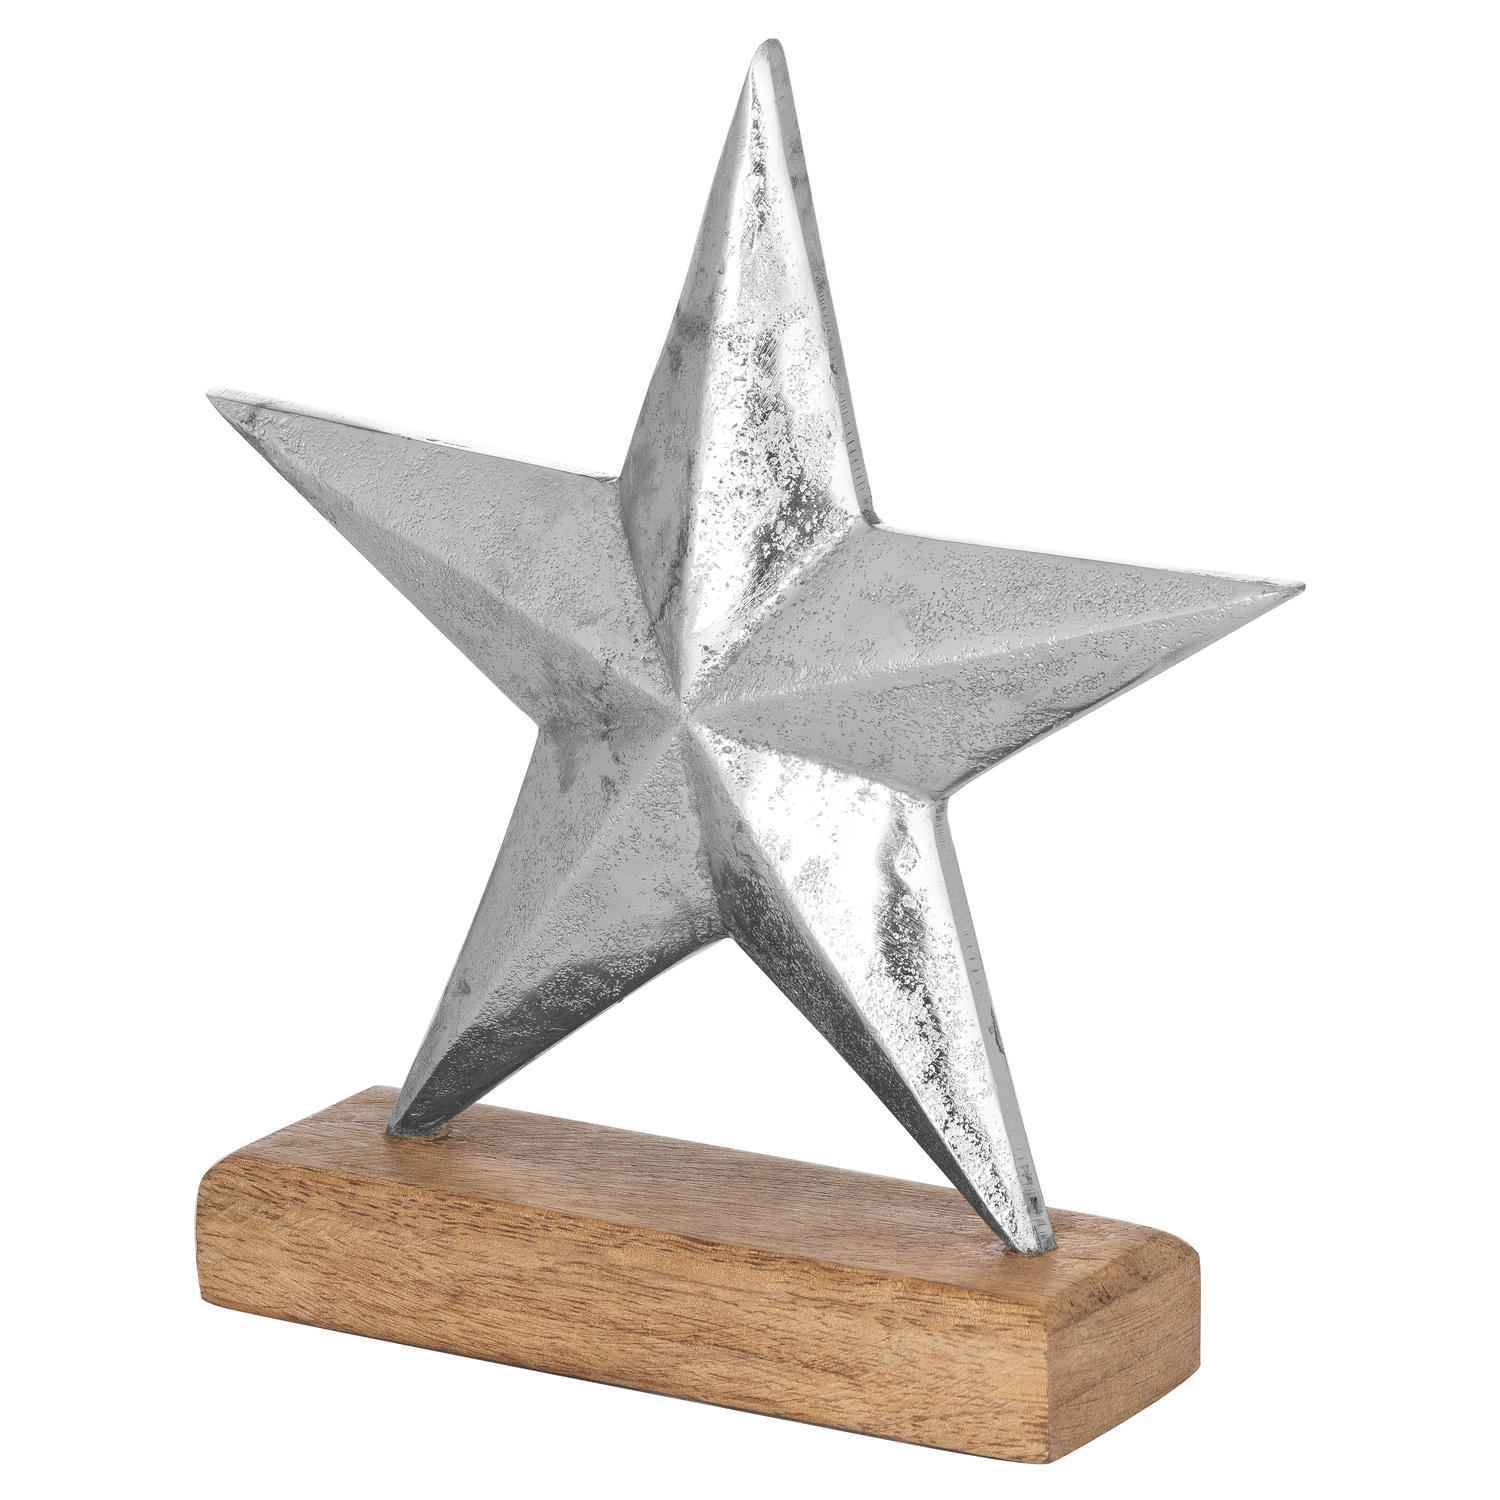 Cast Aluminium North Star Ornament - Image 1